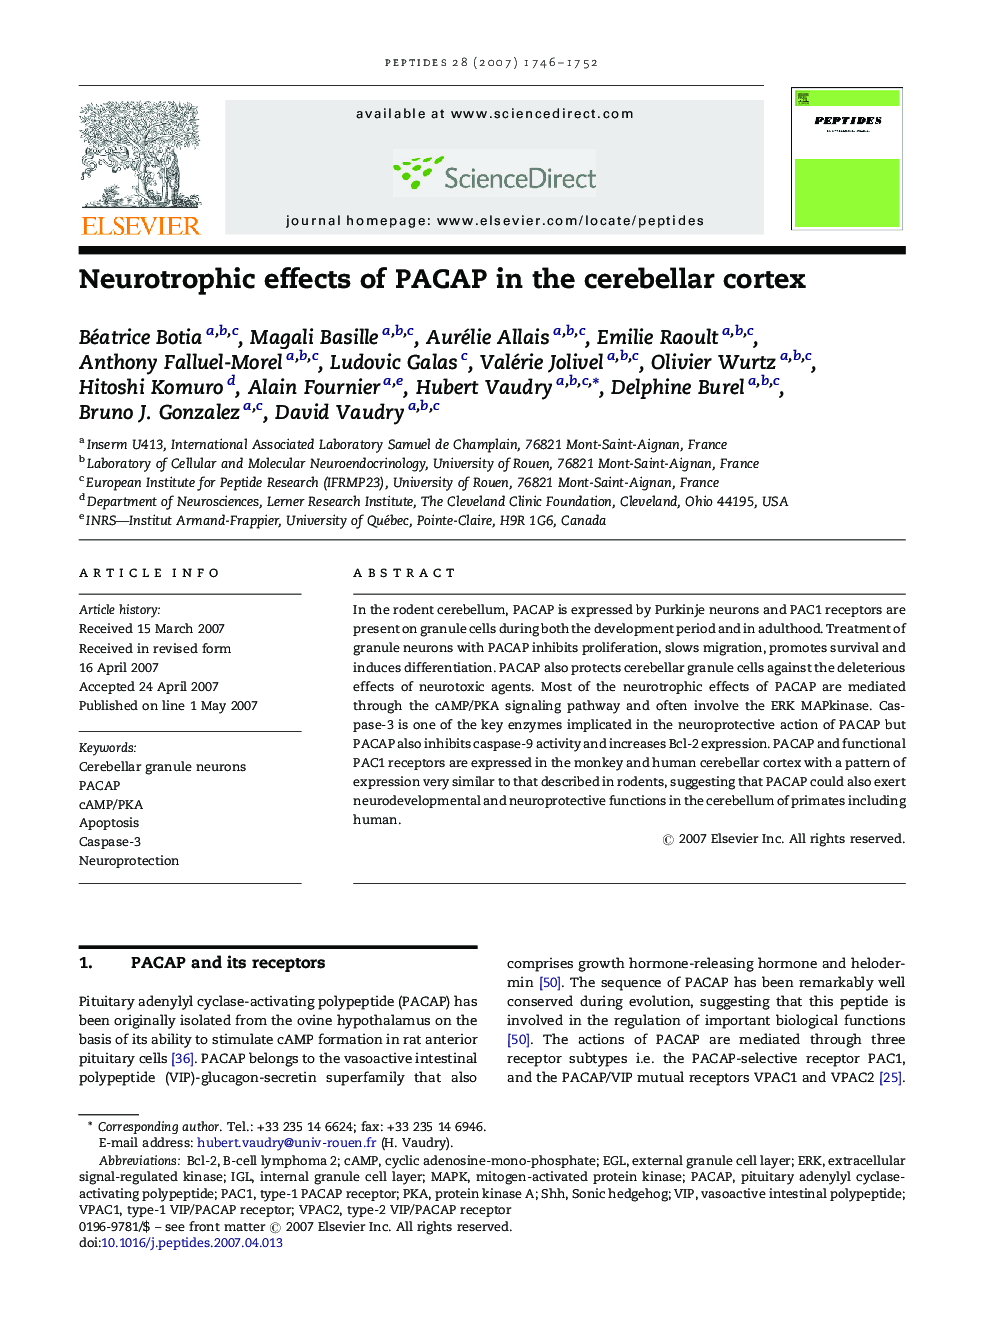 Neurotrophic effects of PACAP in the cerebellar cortex